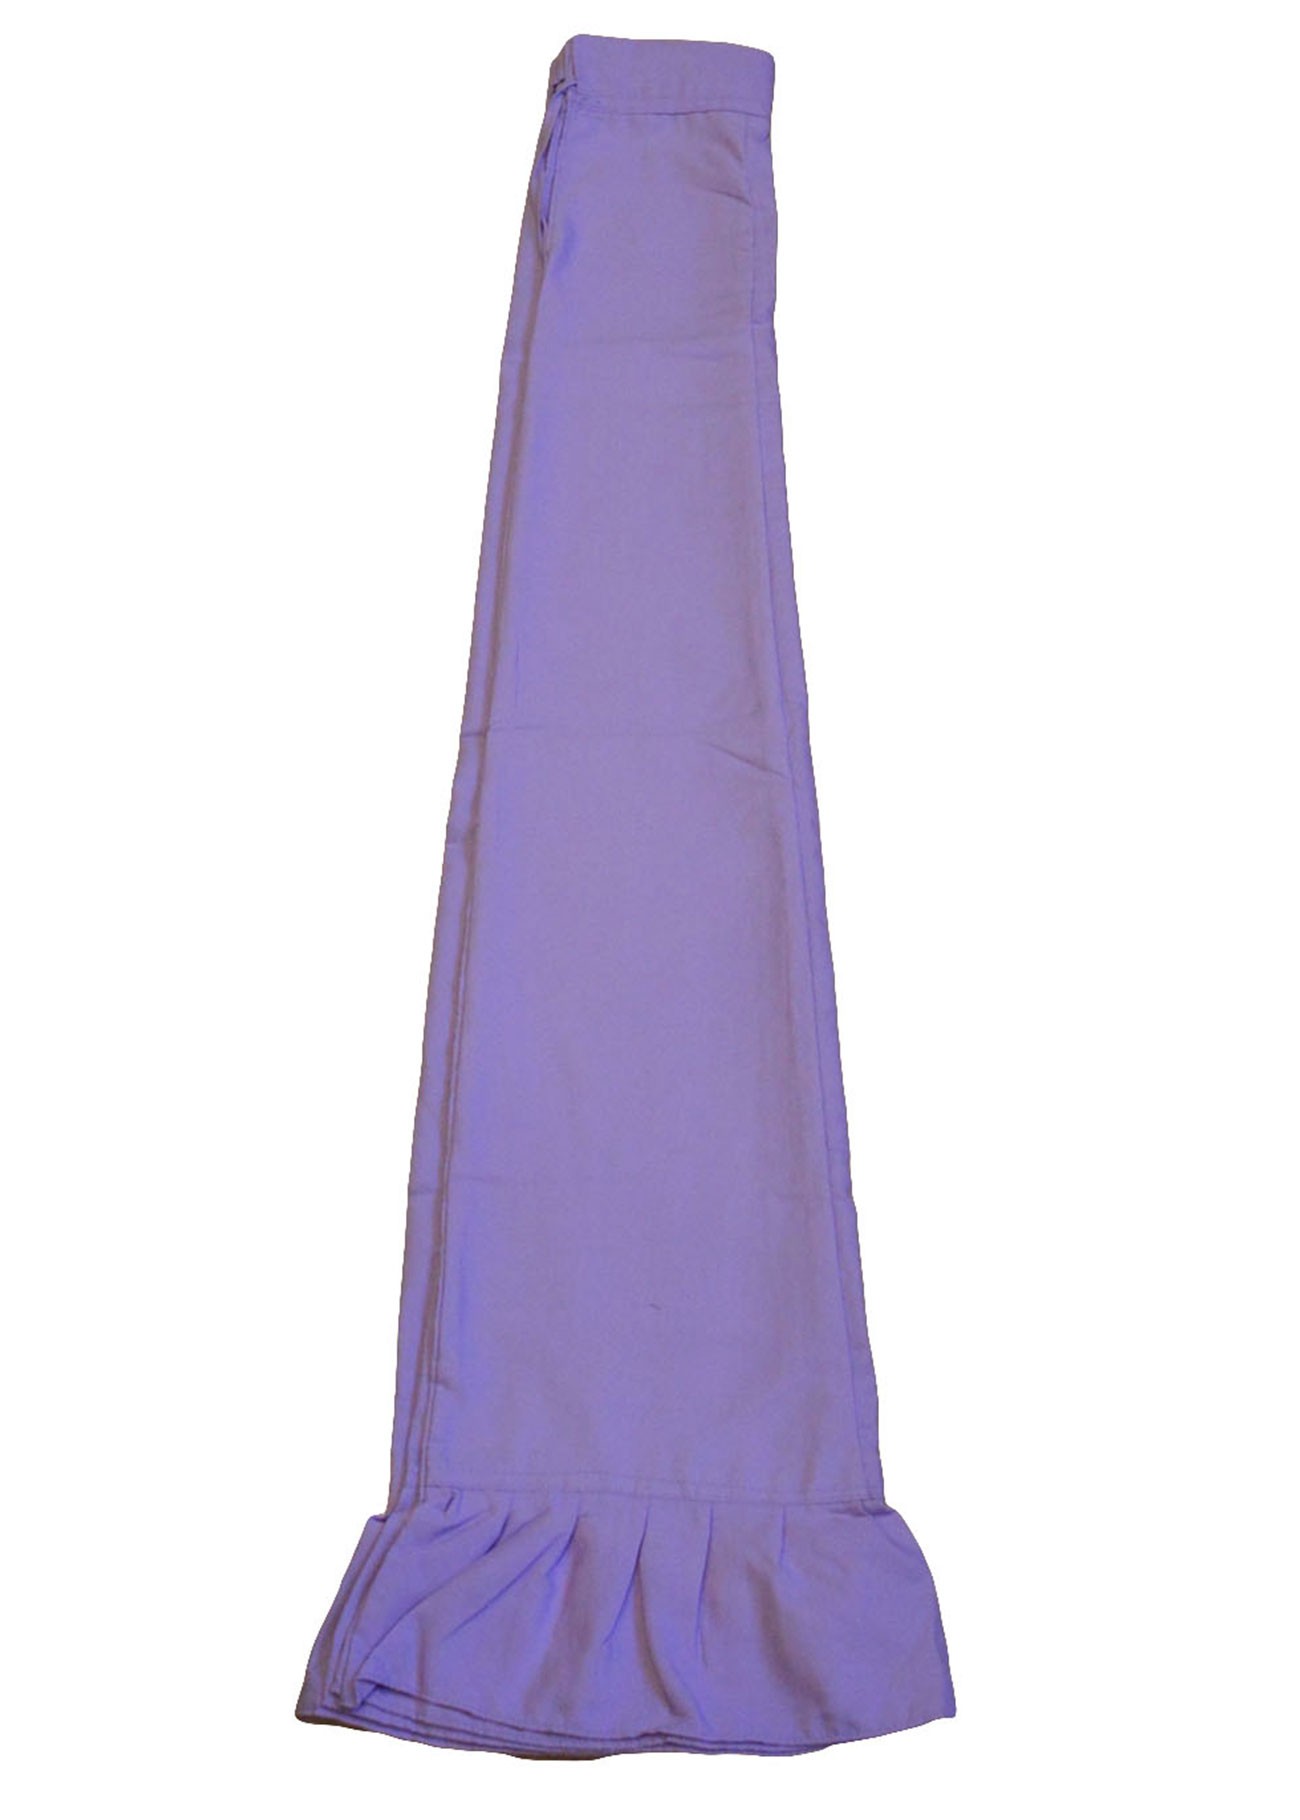 polyester Petticoat Underskirt in Lavender